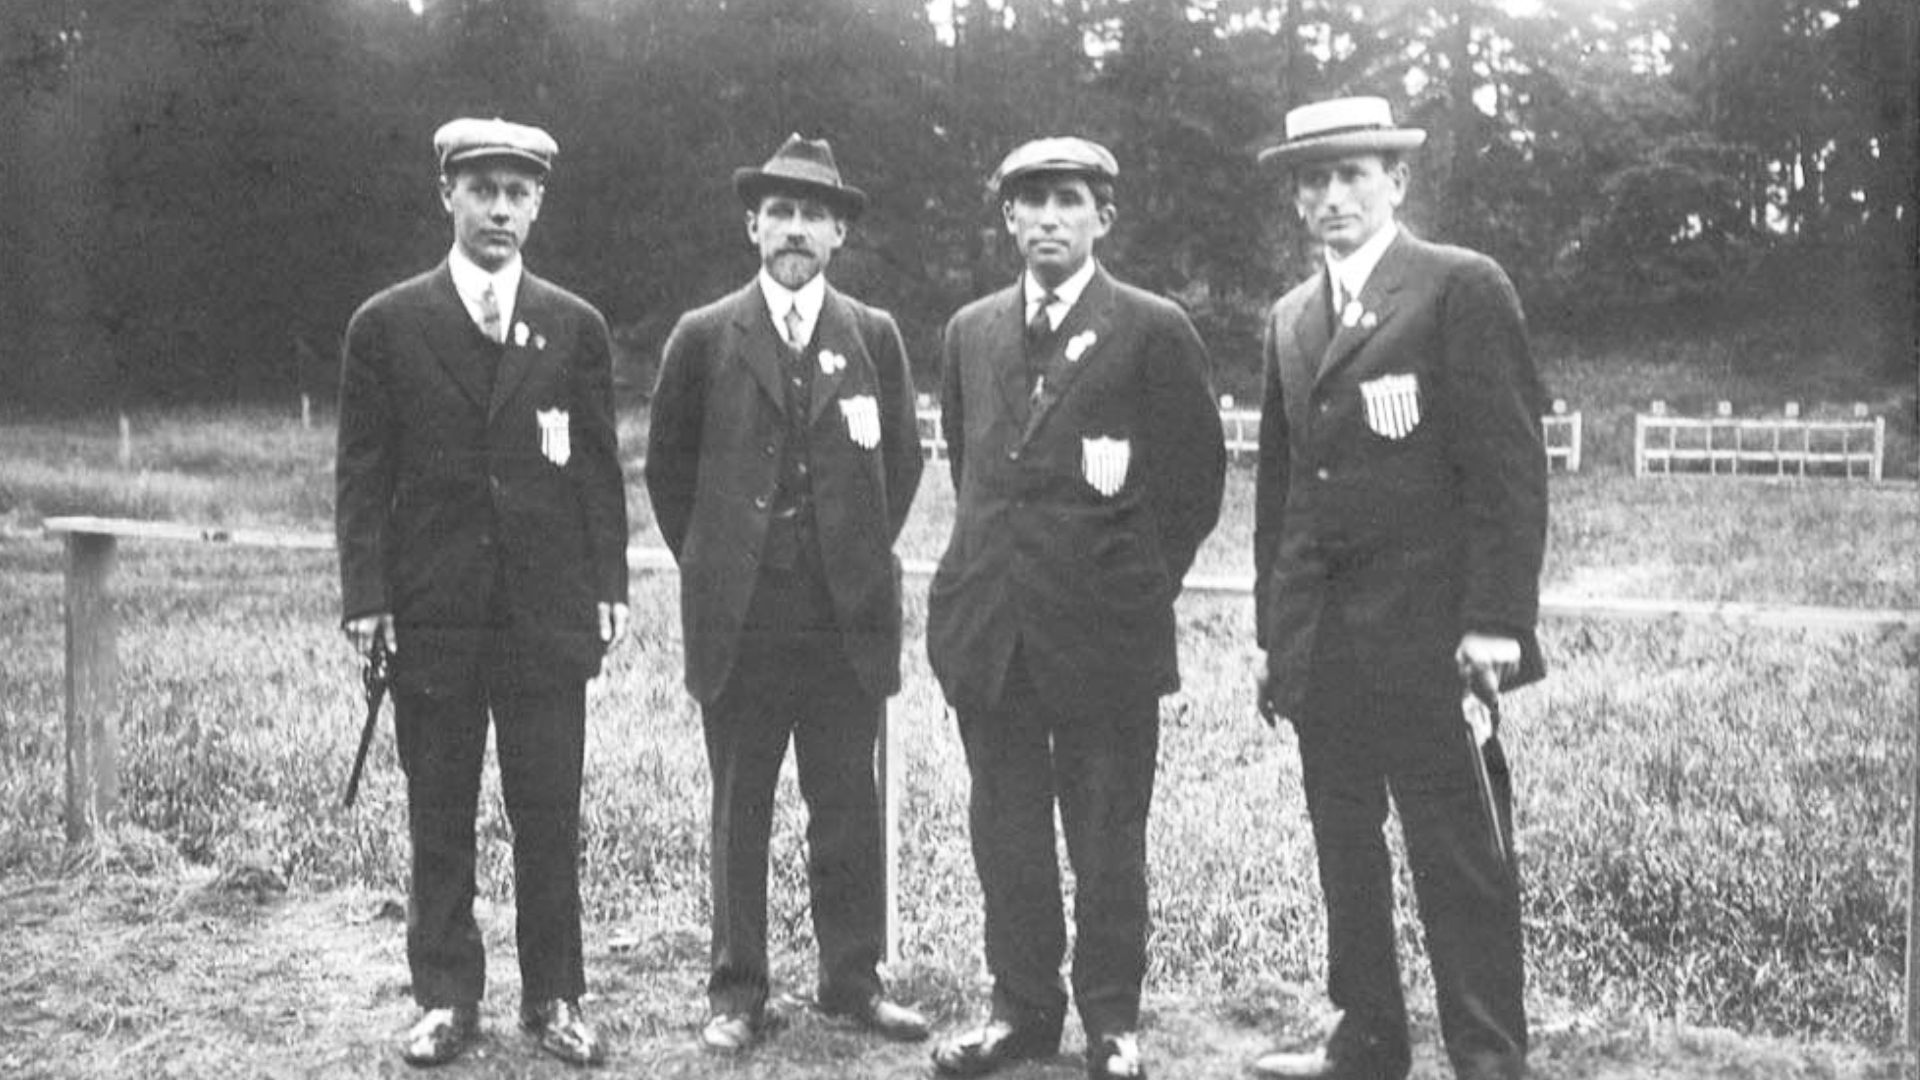 Members of the 1912 U.S. Olympic Pistol Team